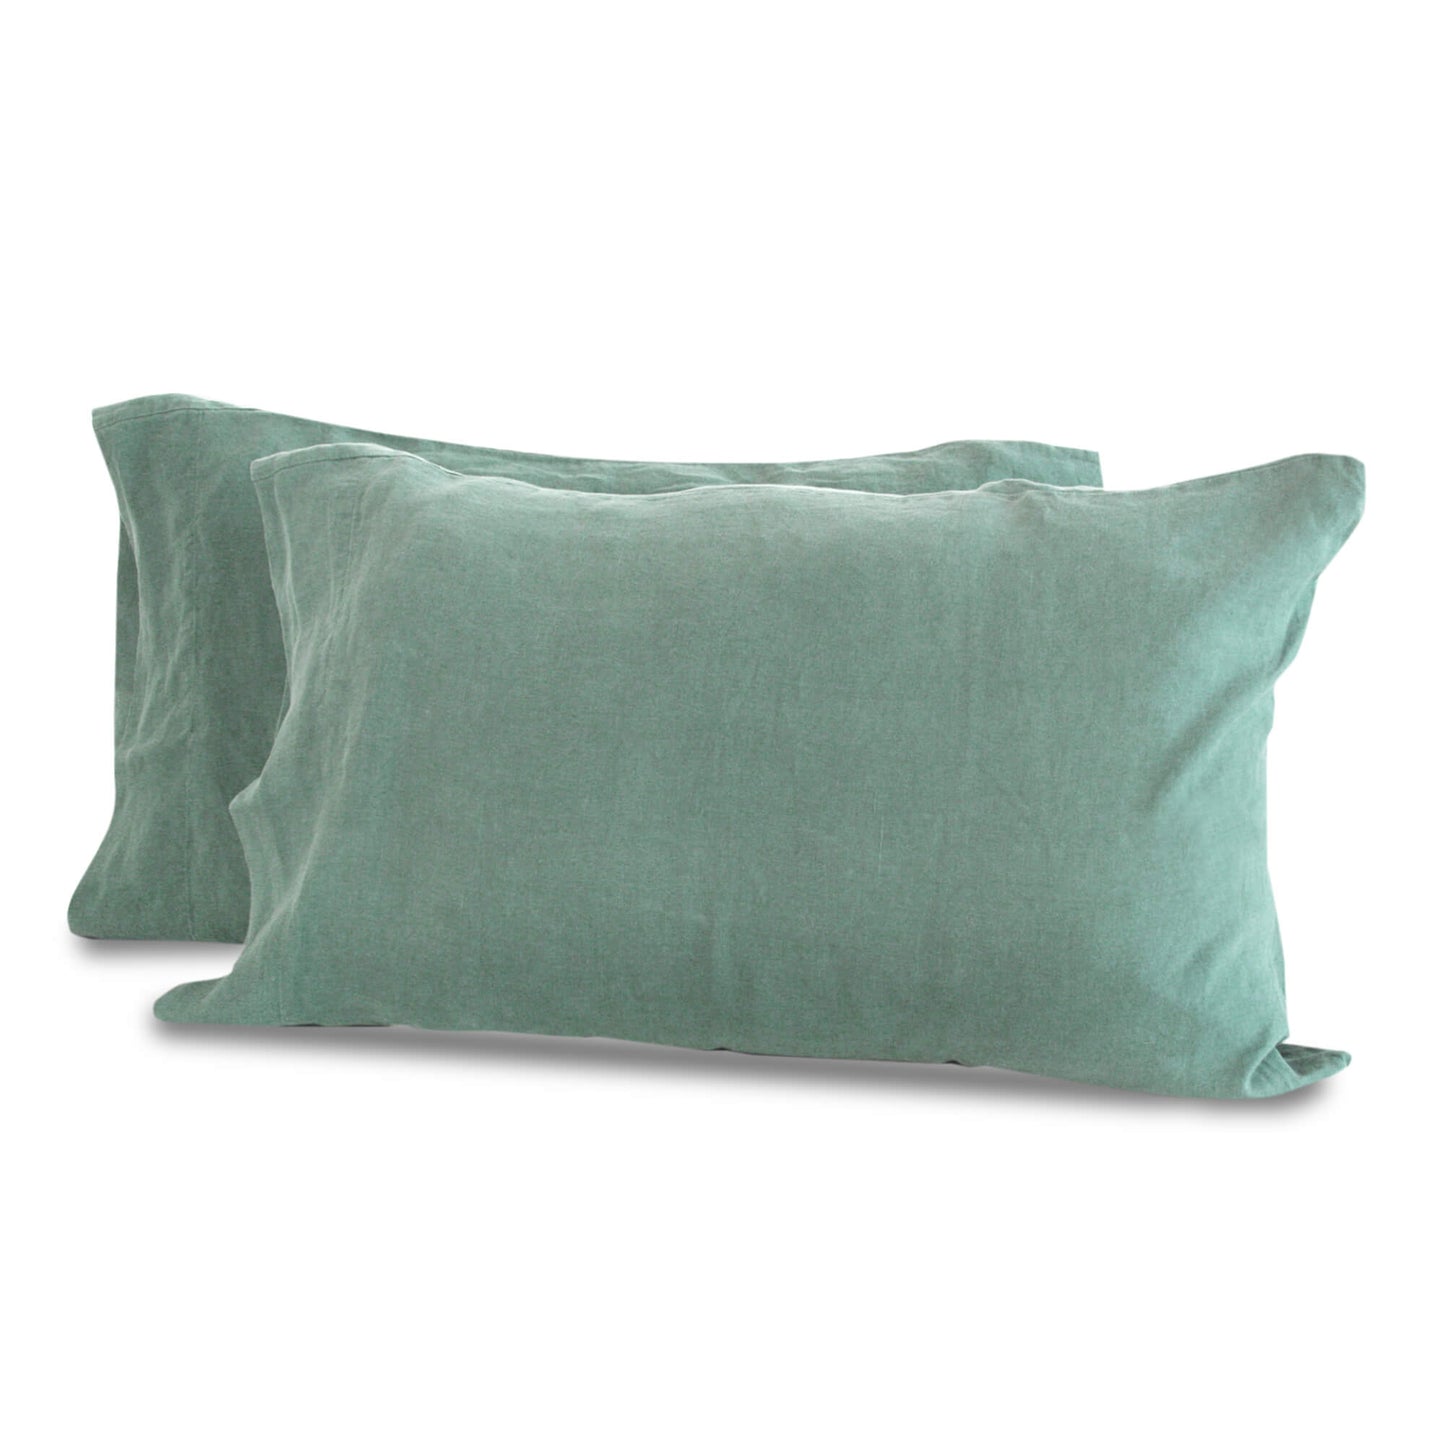 Delilah Home 100% Hemp Pillow Cases
Jungle Pillows